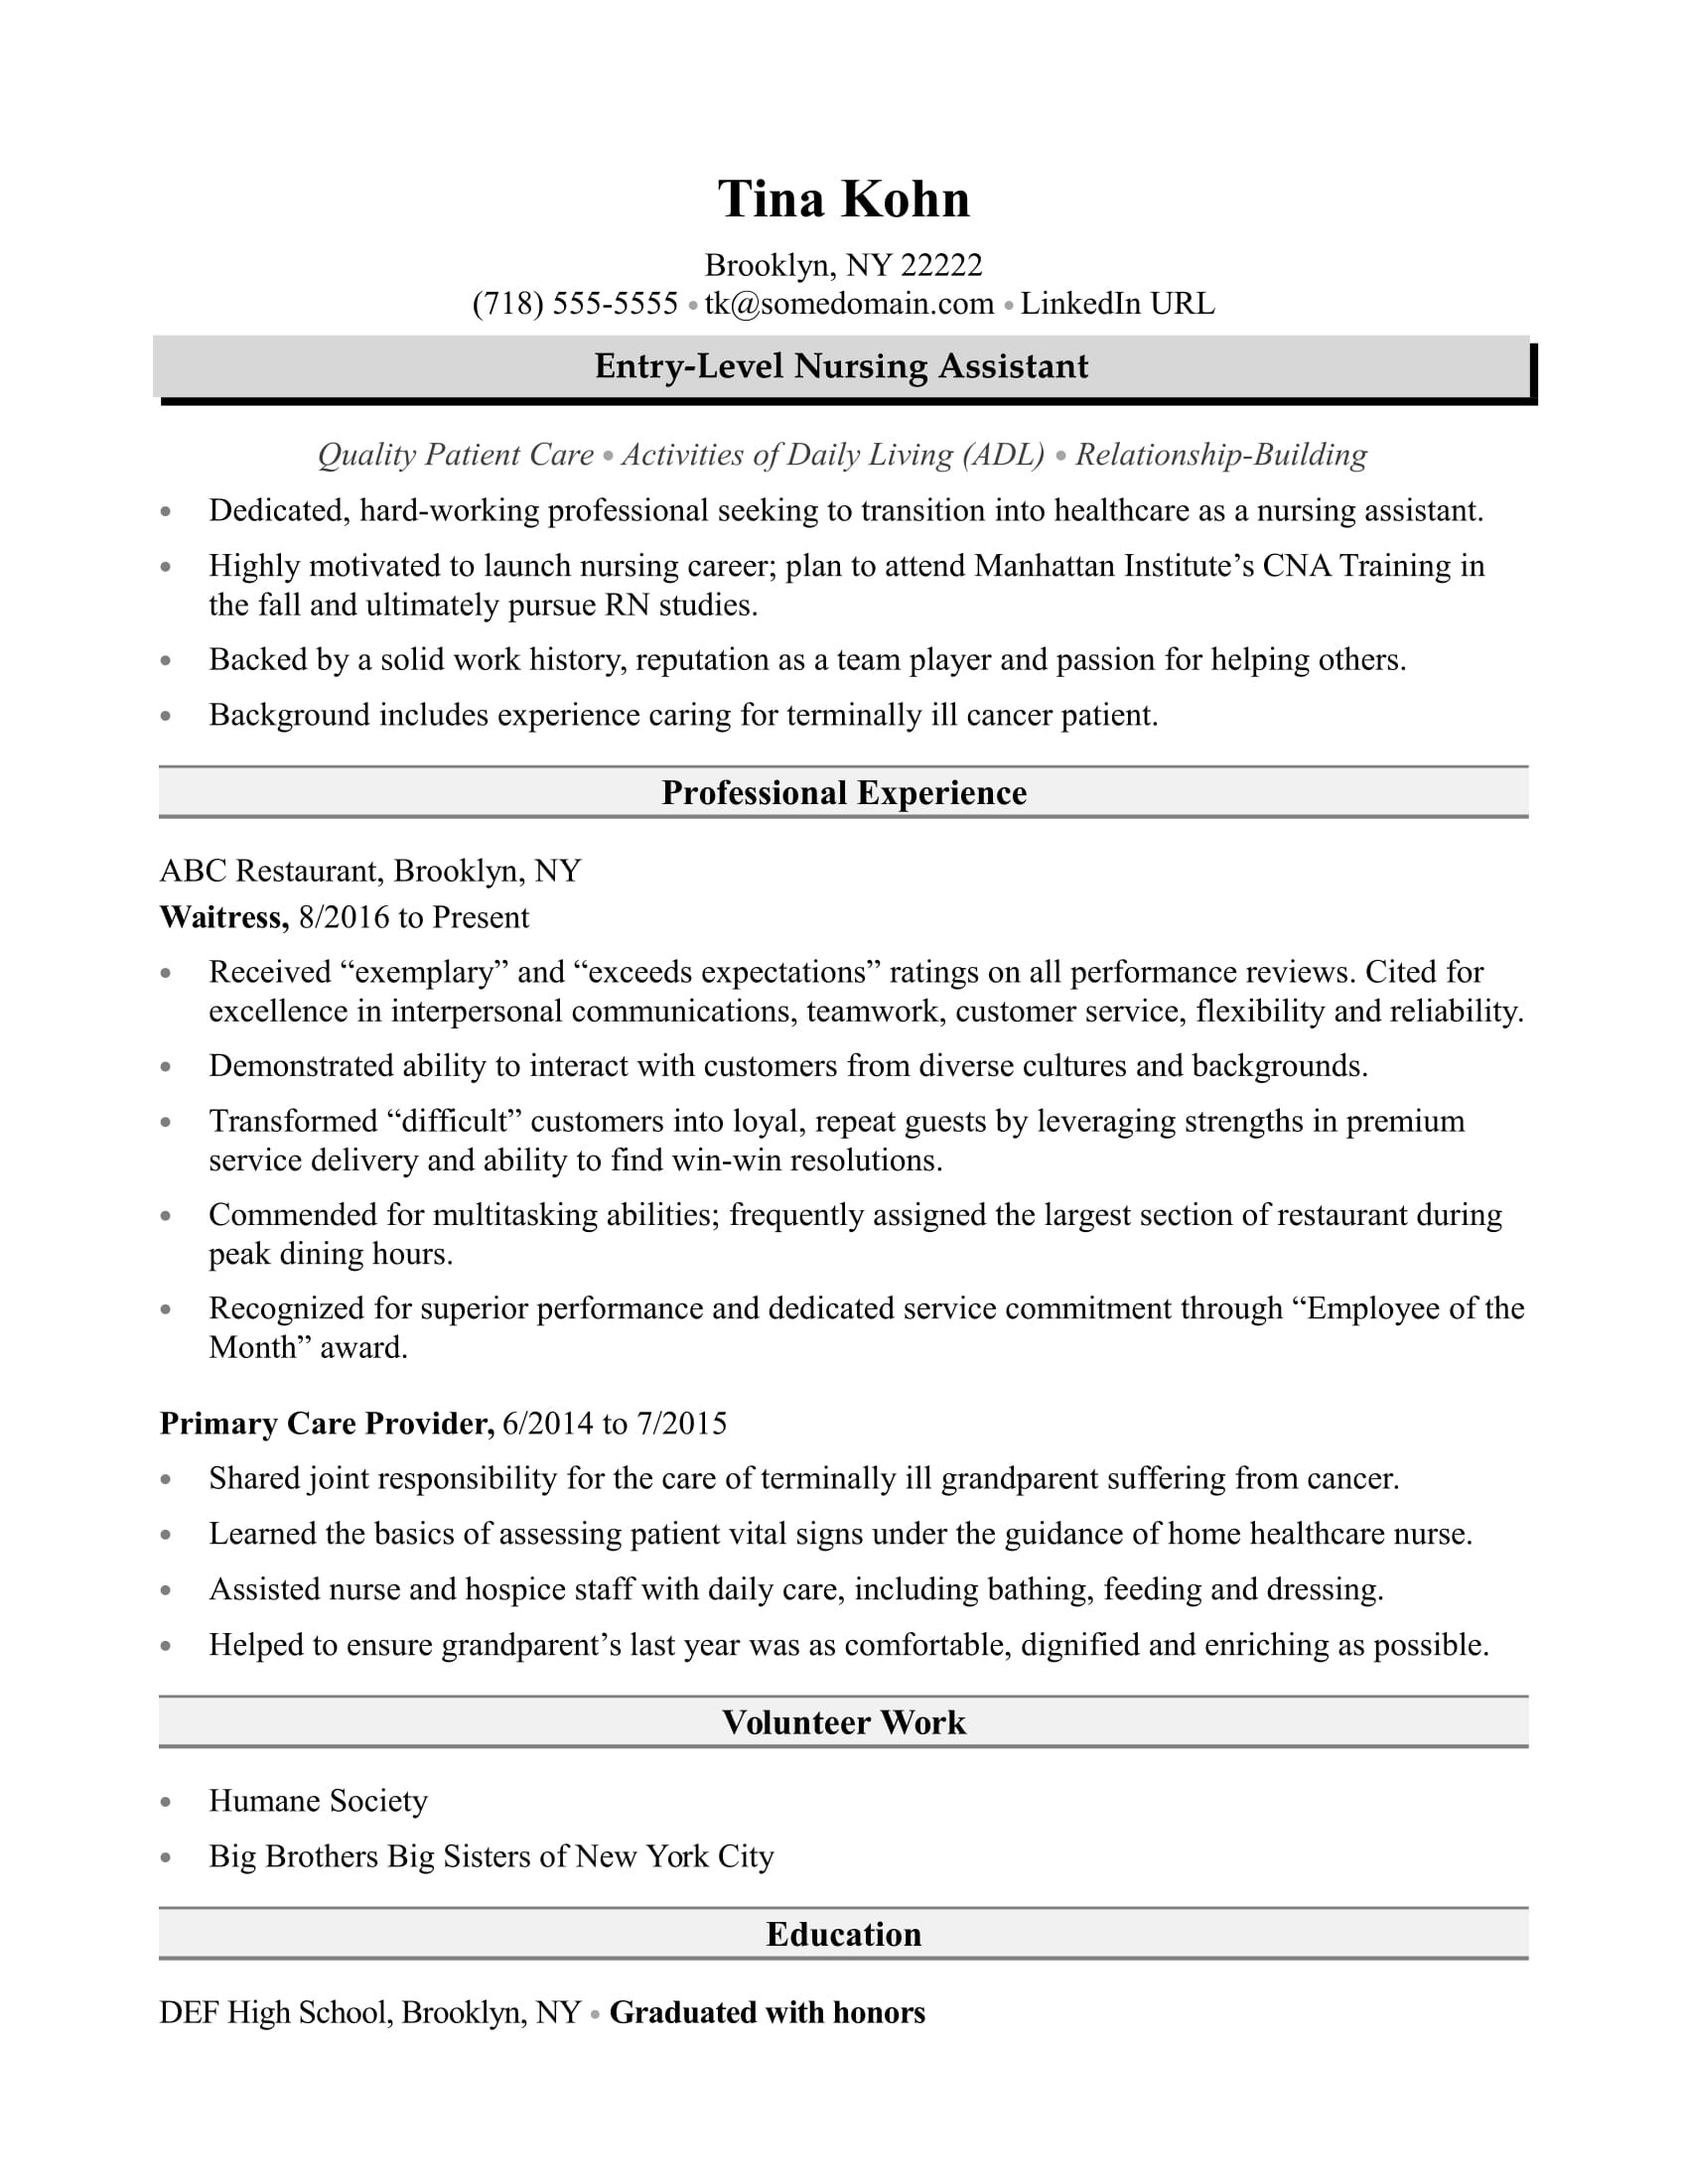 Resume Samples for Entry Level Nurses Nursing assistant Resume Sample Monster.com